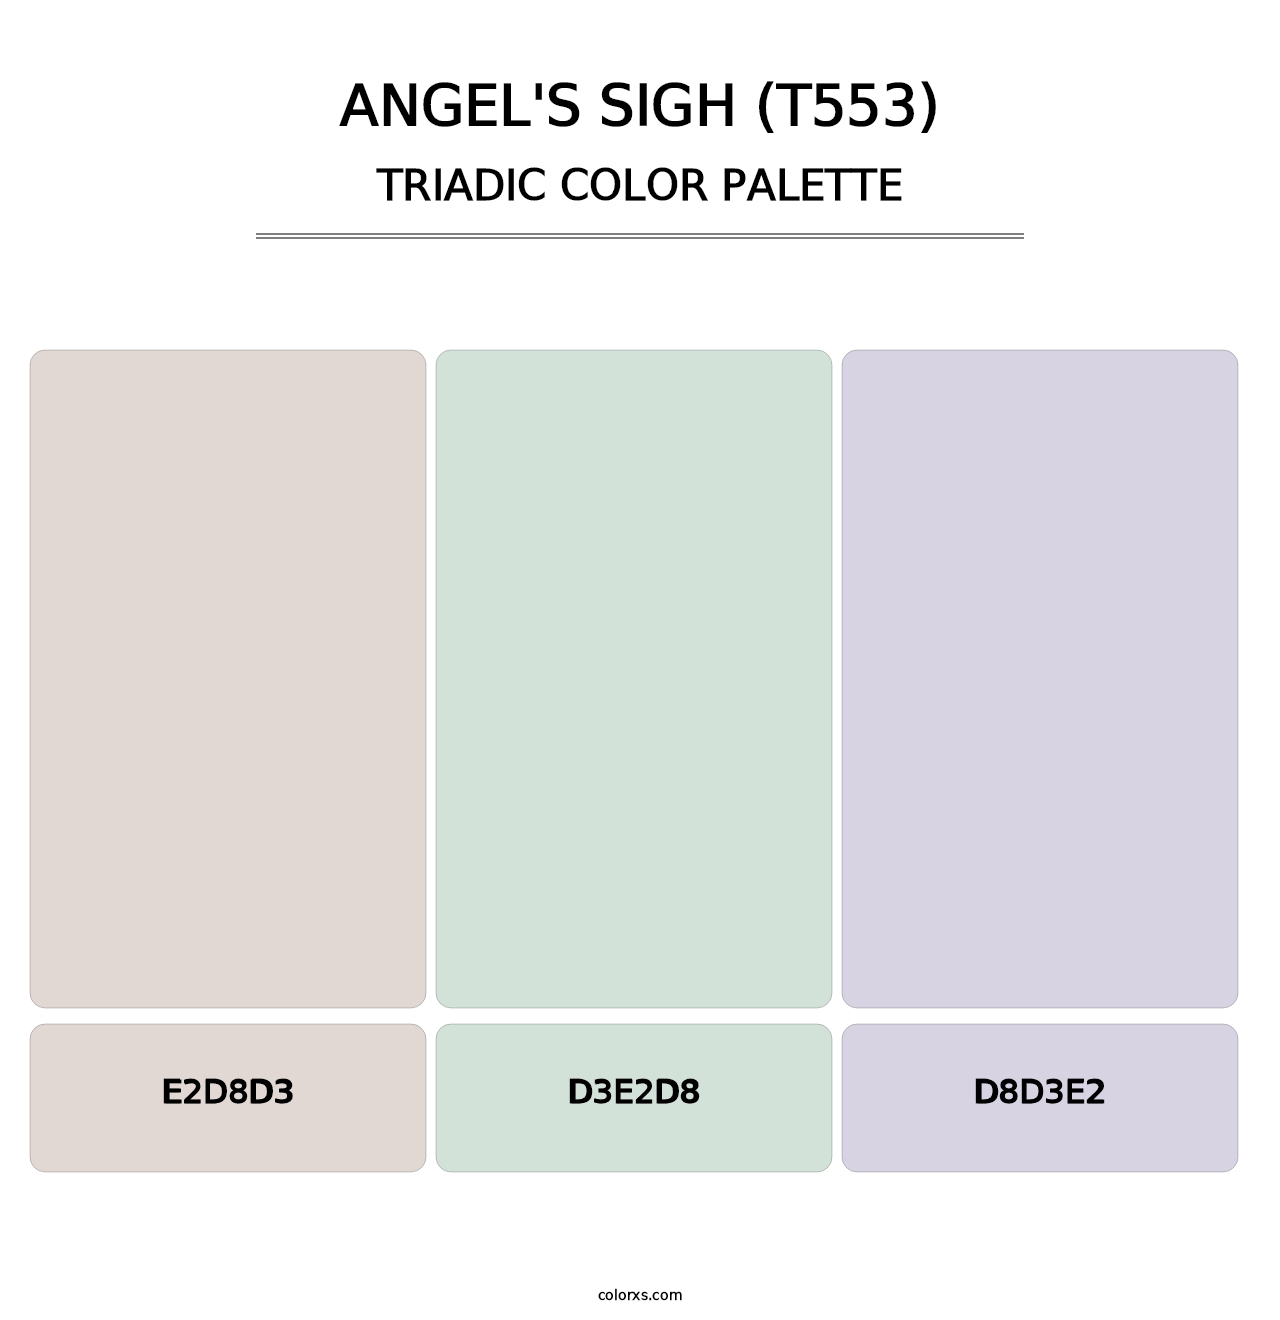 Angel's Sigh (T553) - Triadic Color Palette